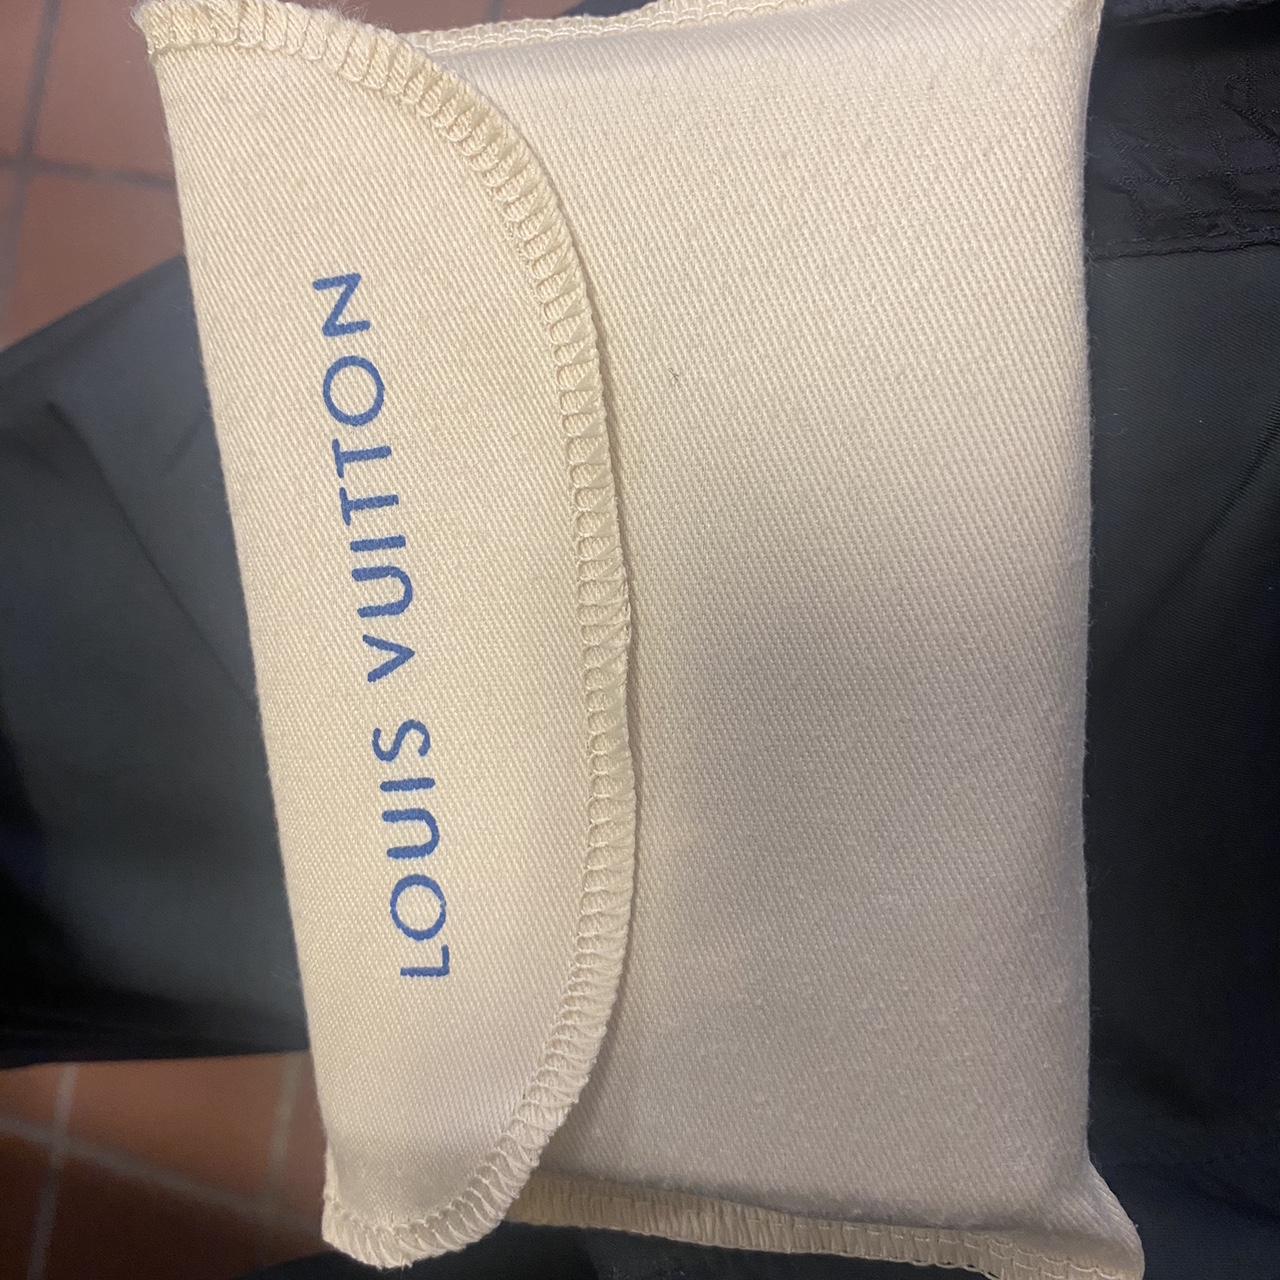 Genuine Louis Vuitton Wallet, scratches to metal but - Depop